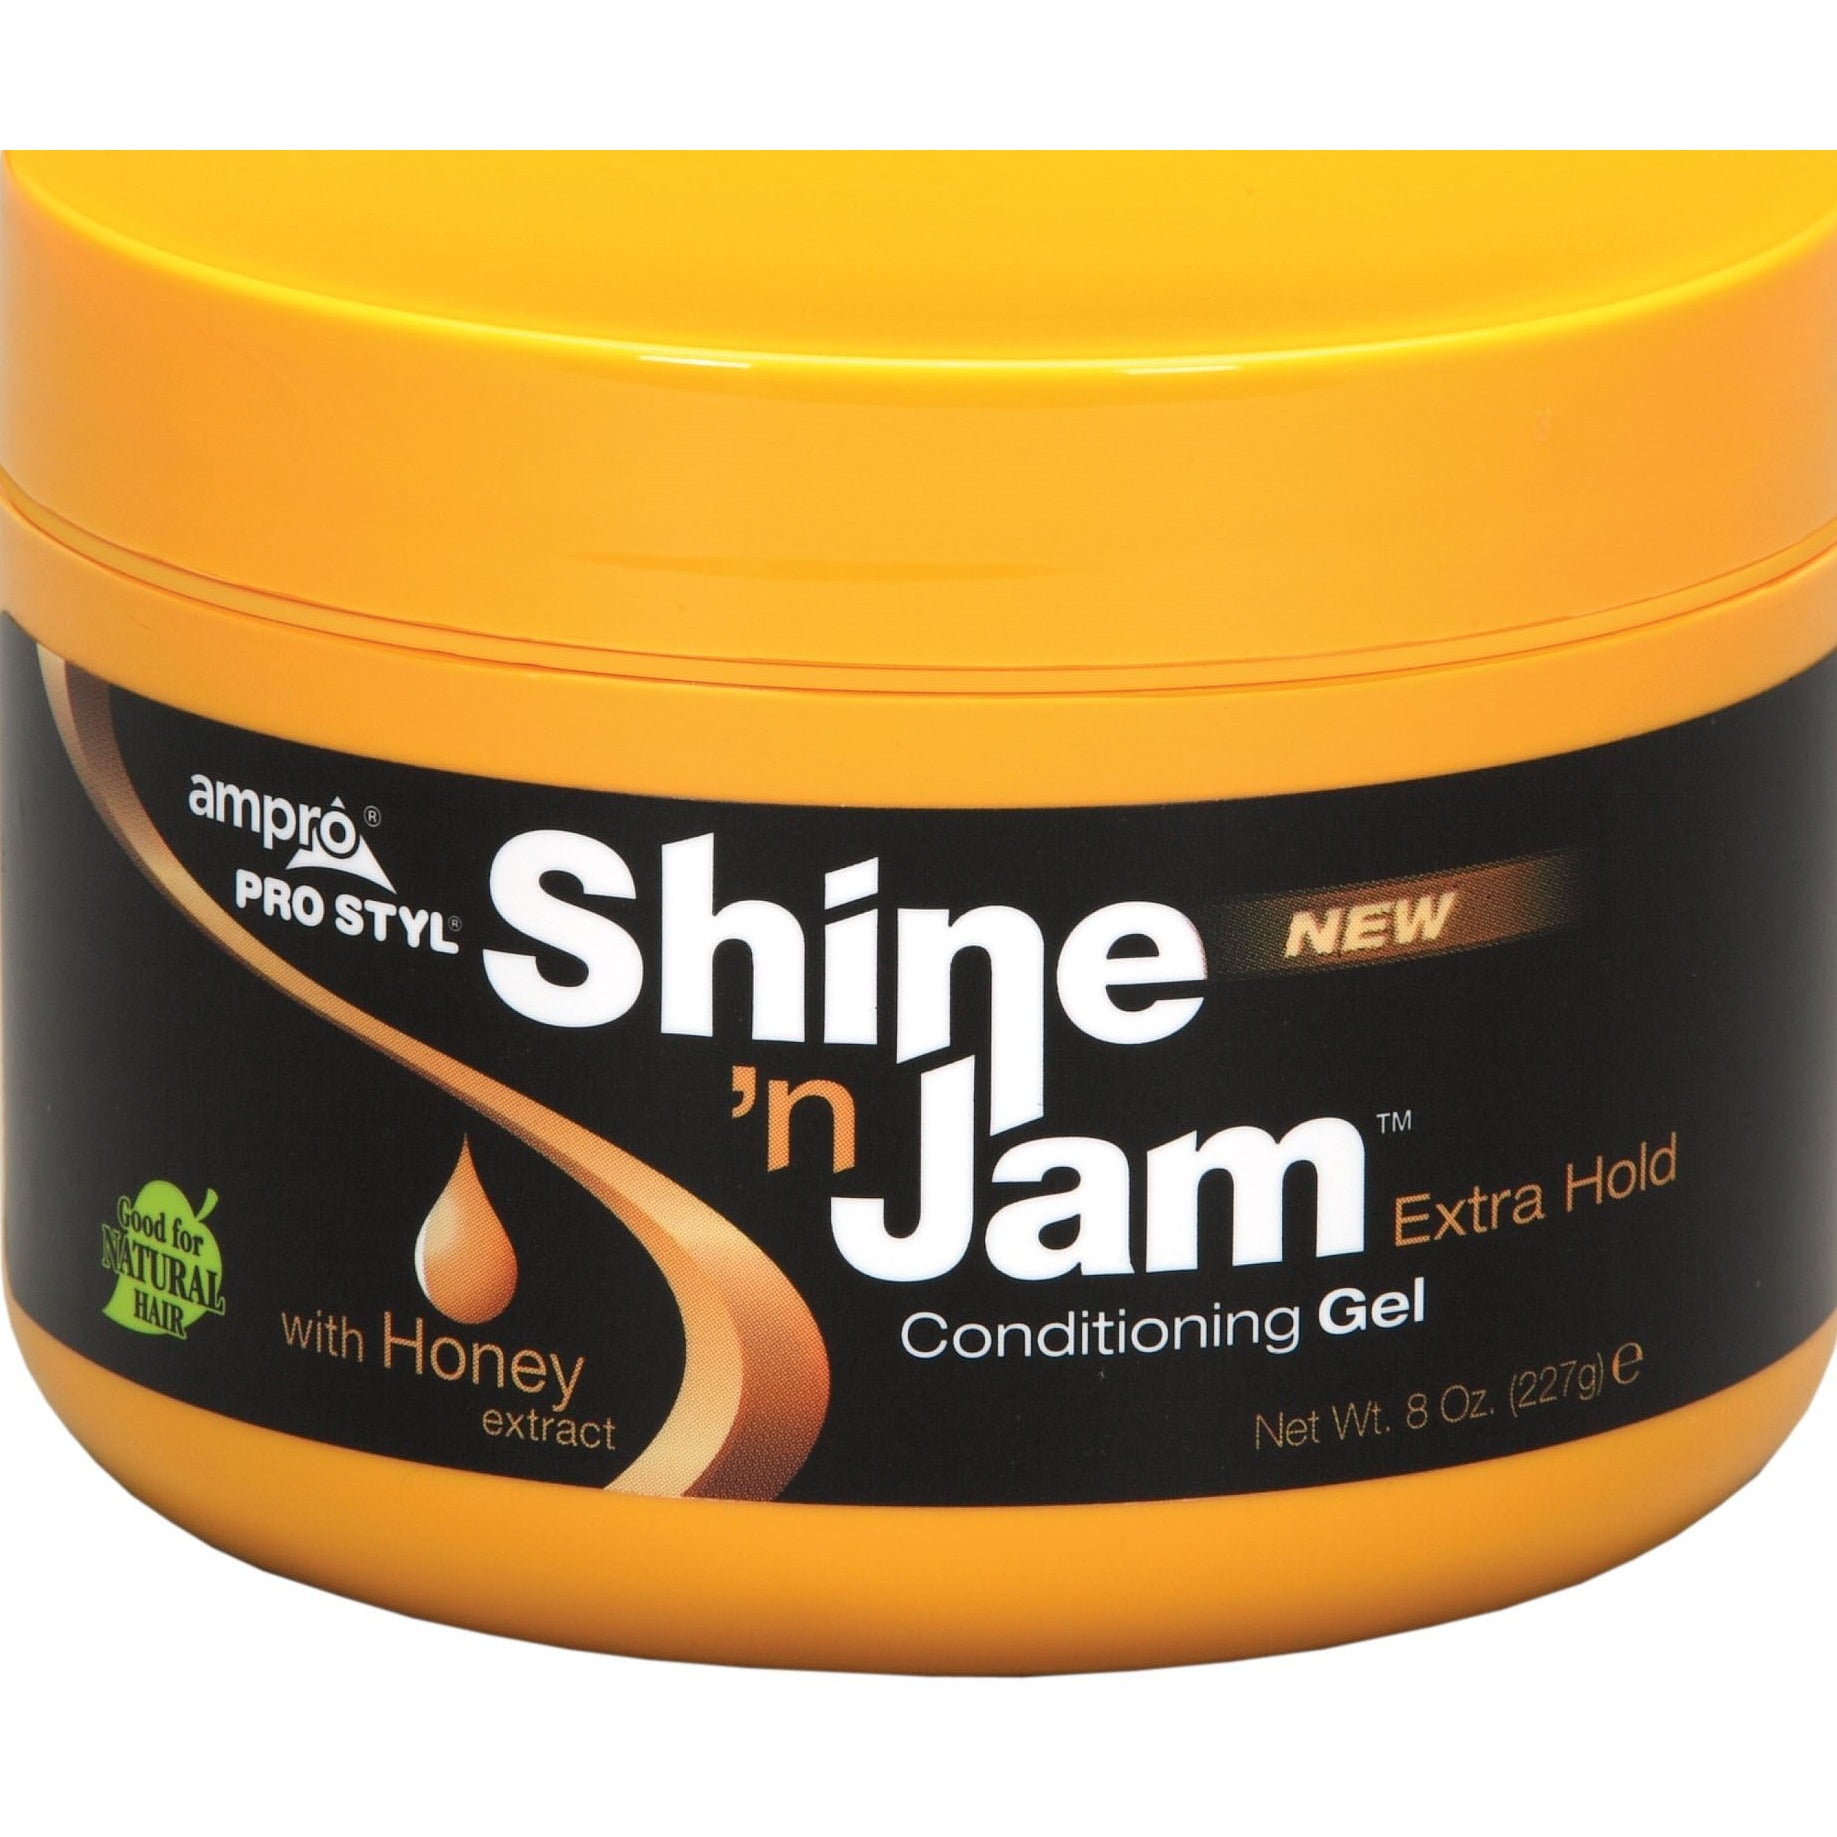 4th Ave Market: Ampro Shine 'n Jam Conditioning Gel, Extra Hold, 8 oz